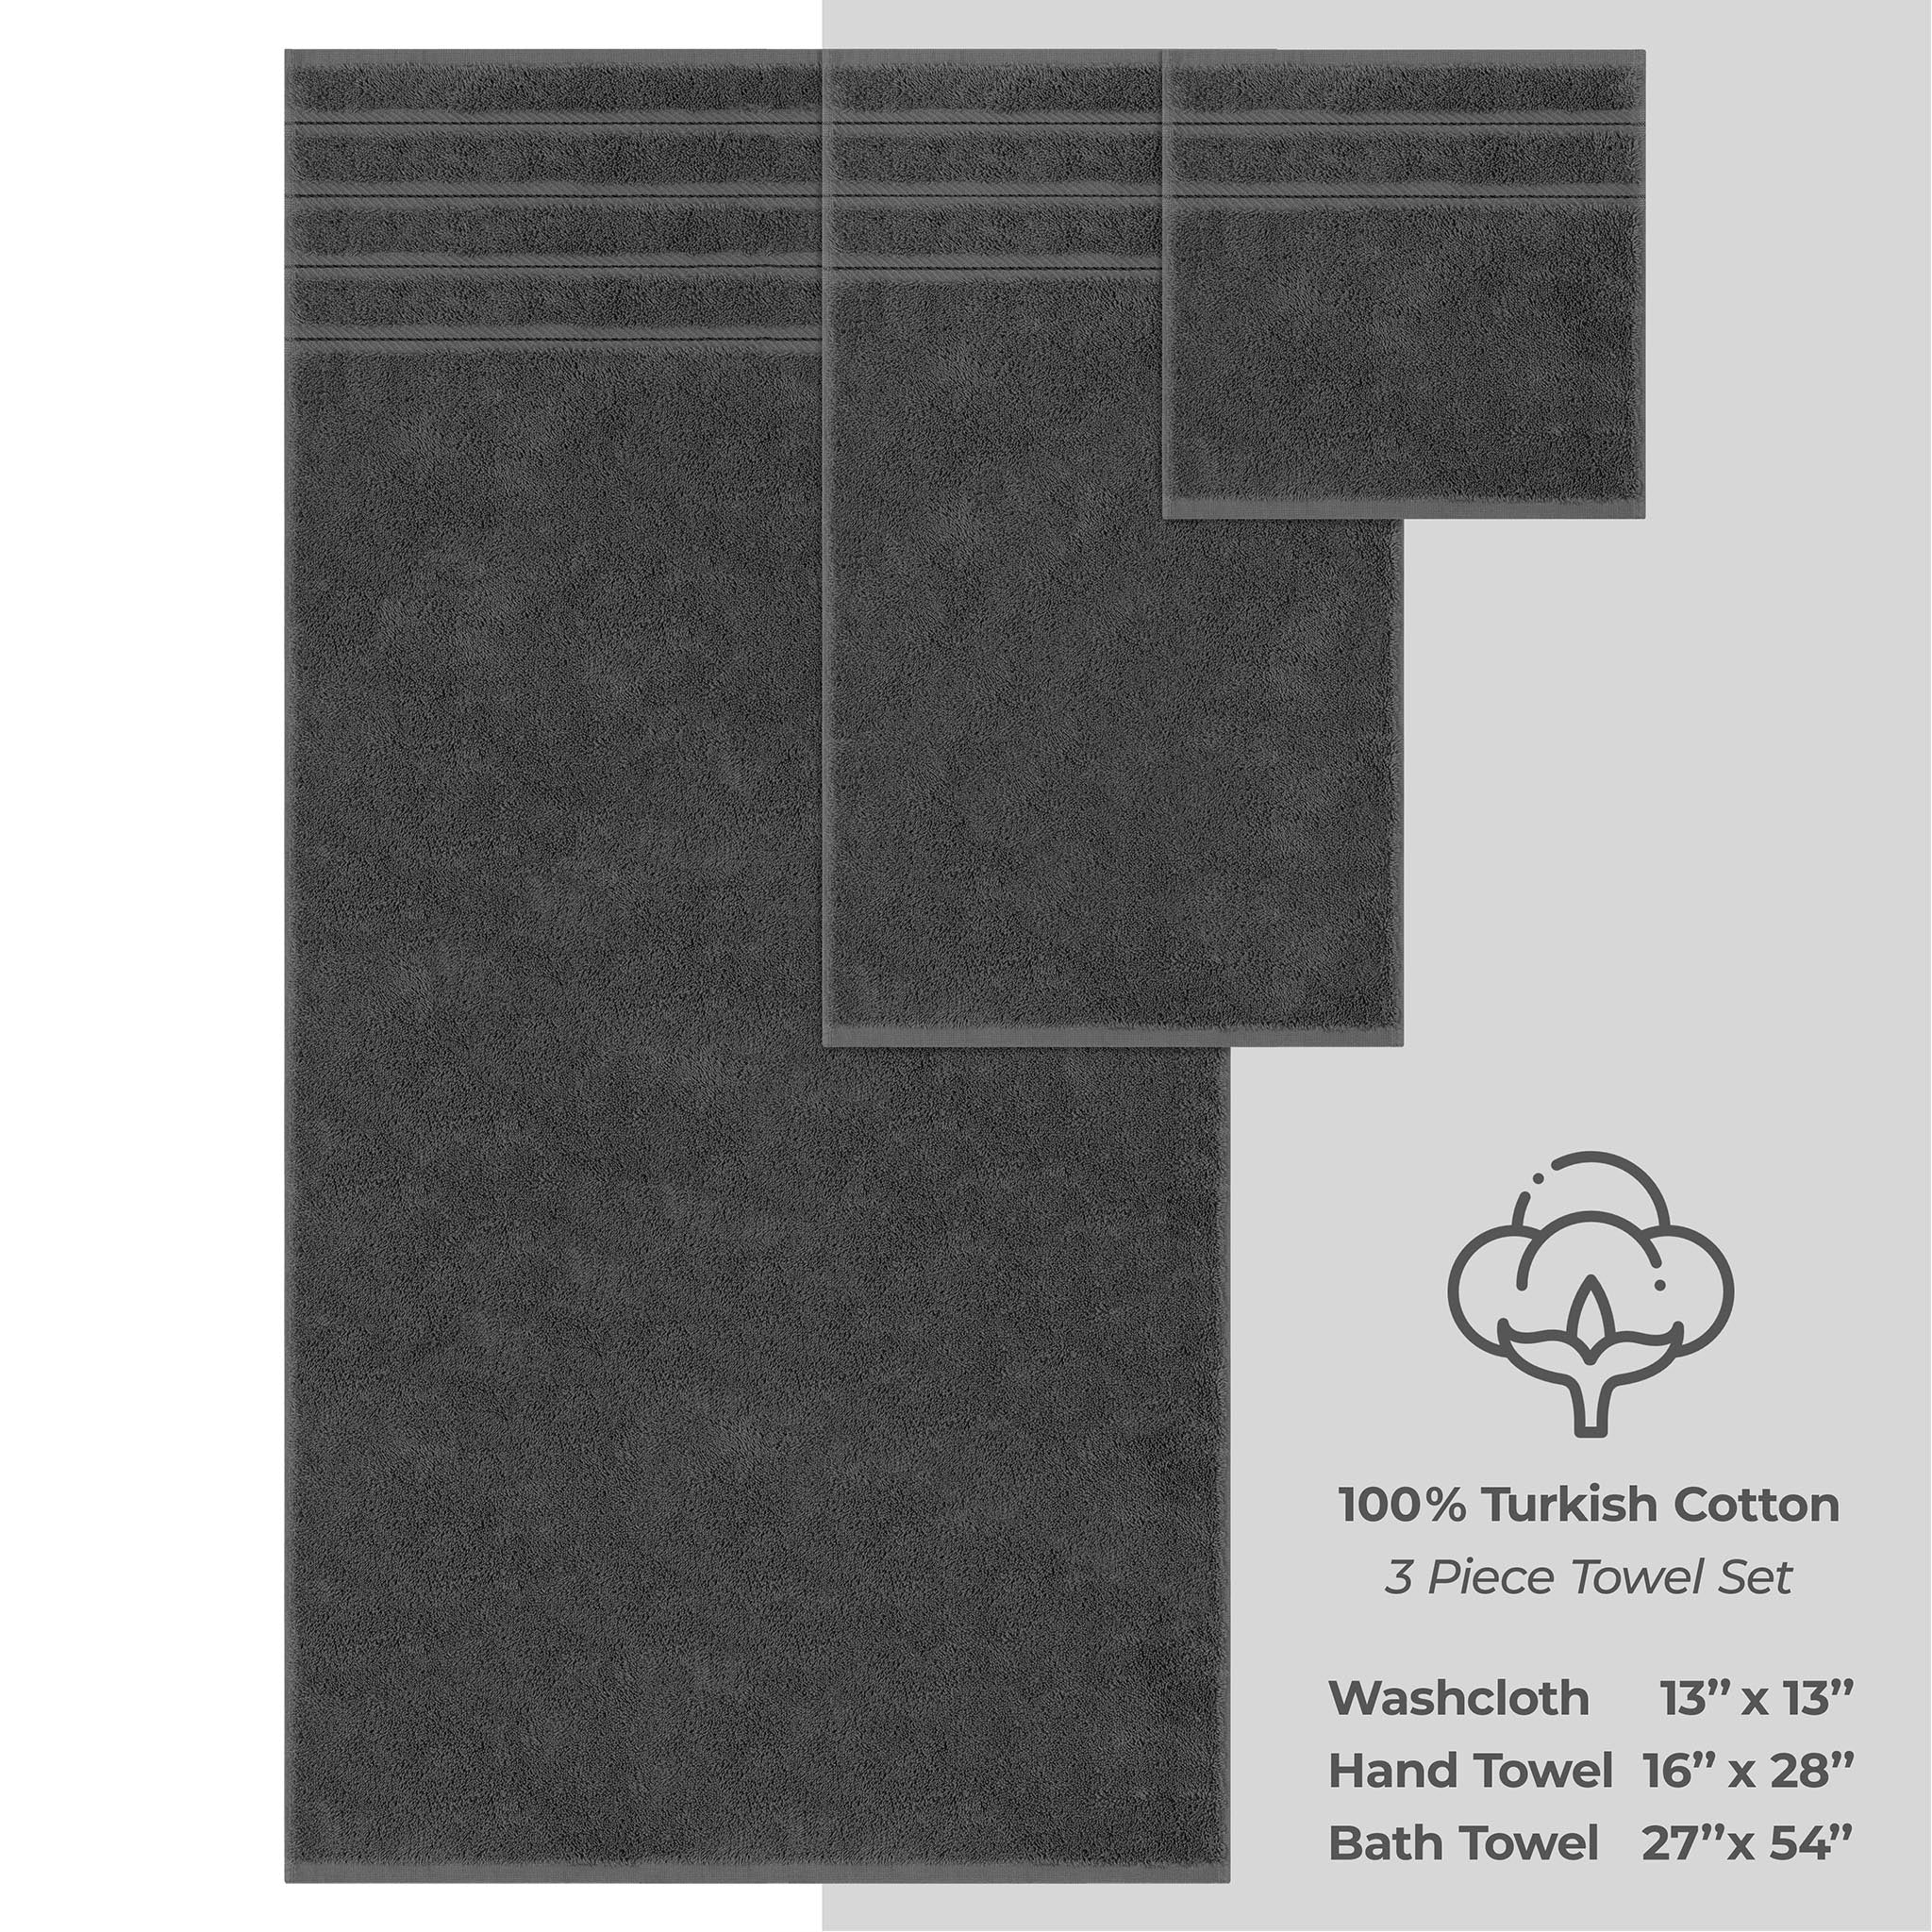 American Soft Linen 3 Piece Luxury Hotel Towel Set 20 set case pack gray-4